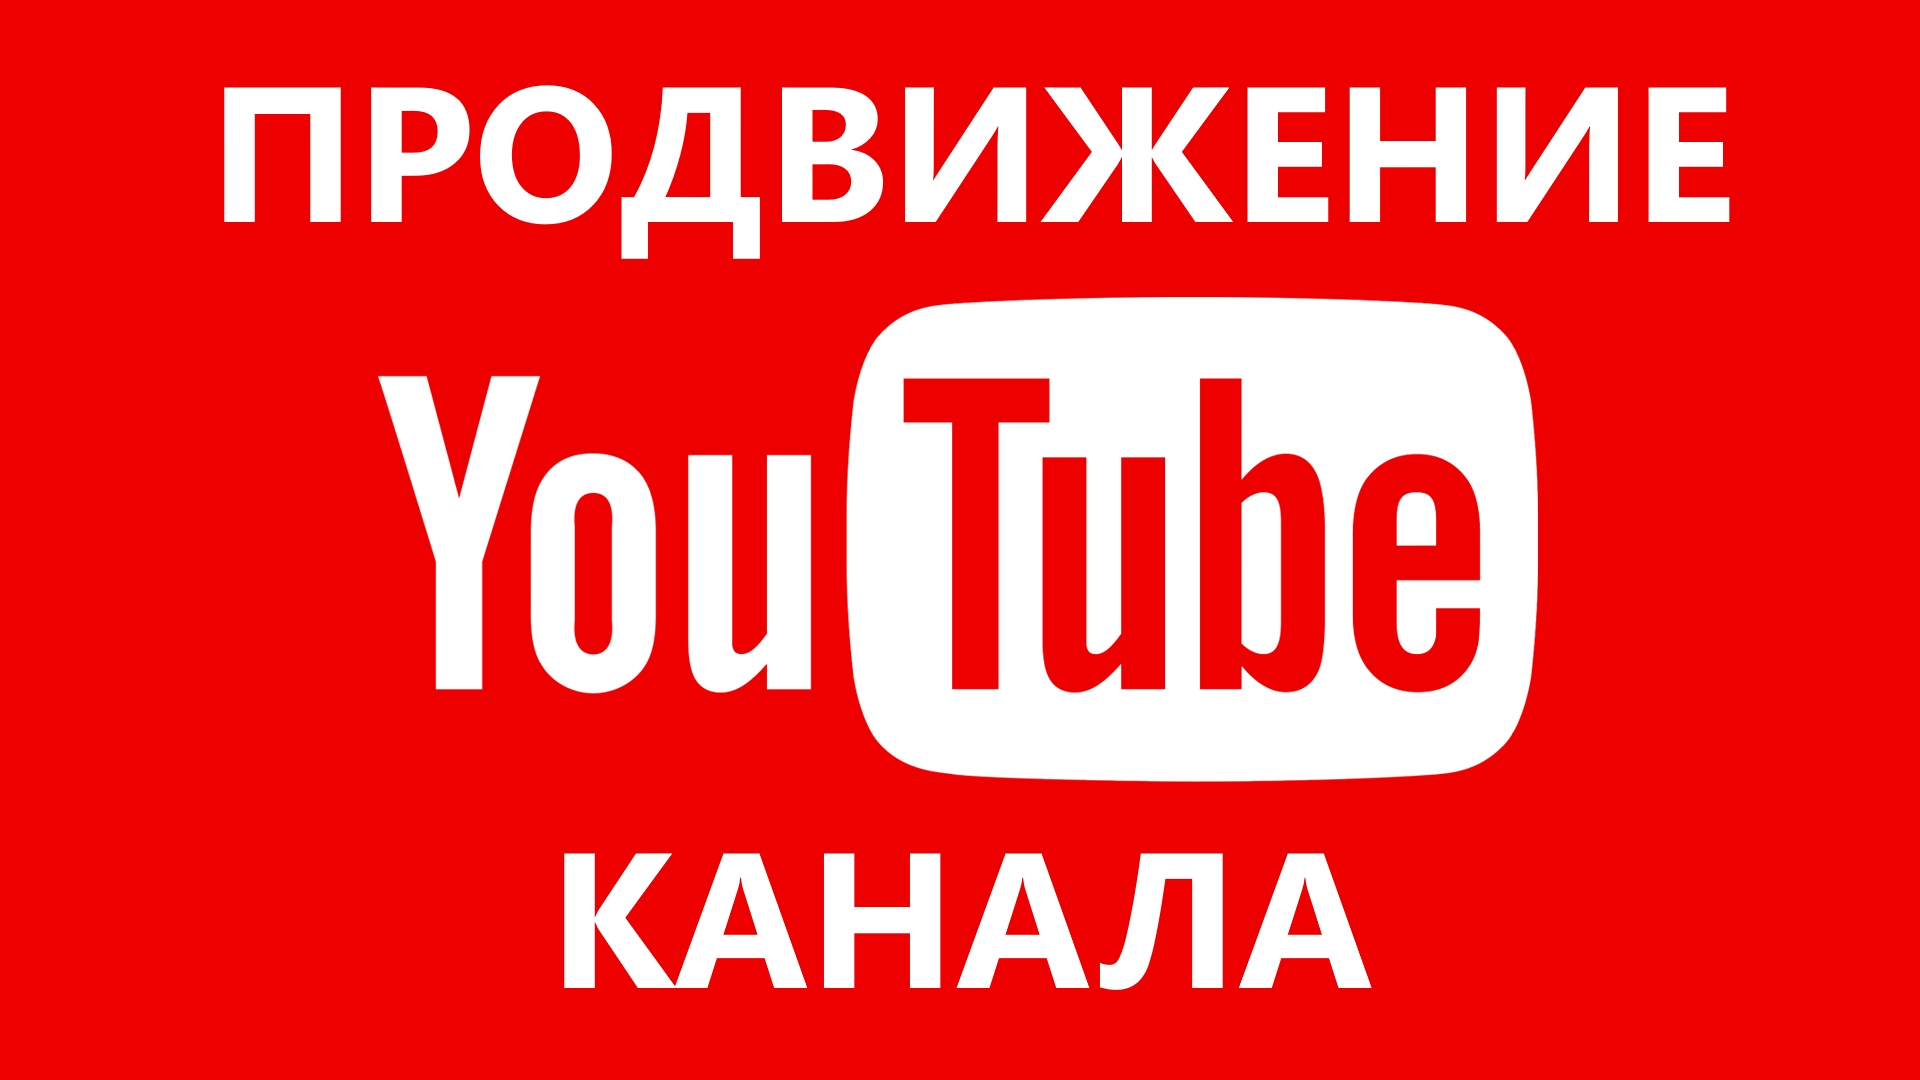 Продвижение YouTube